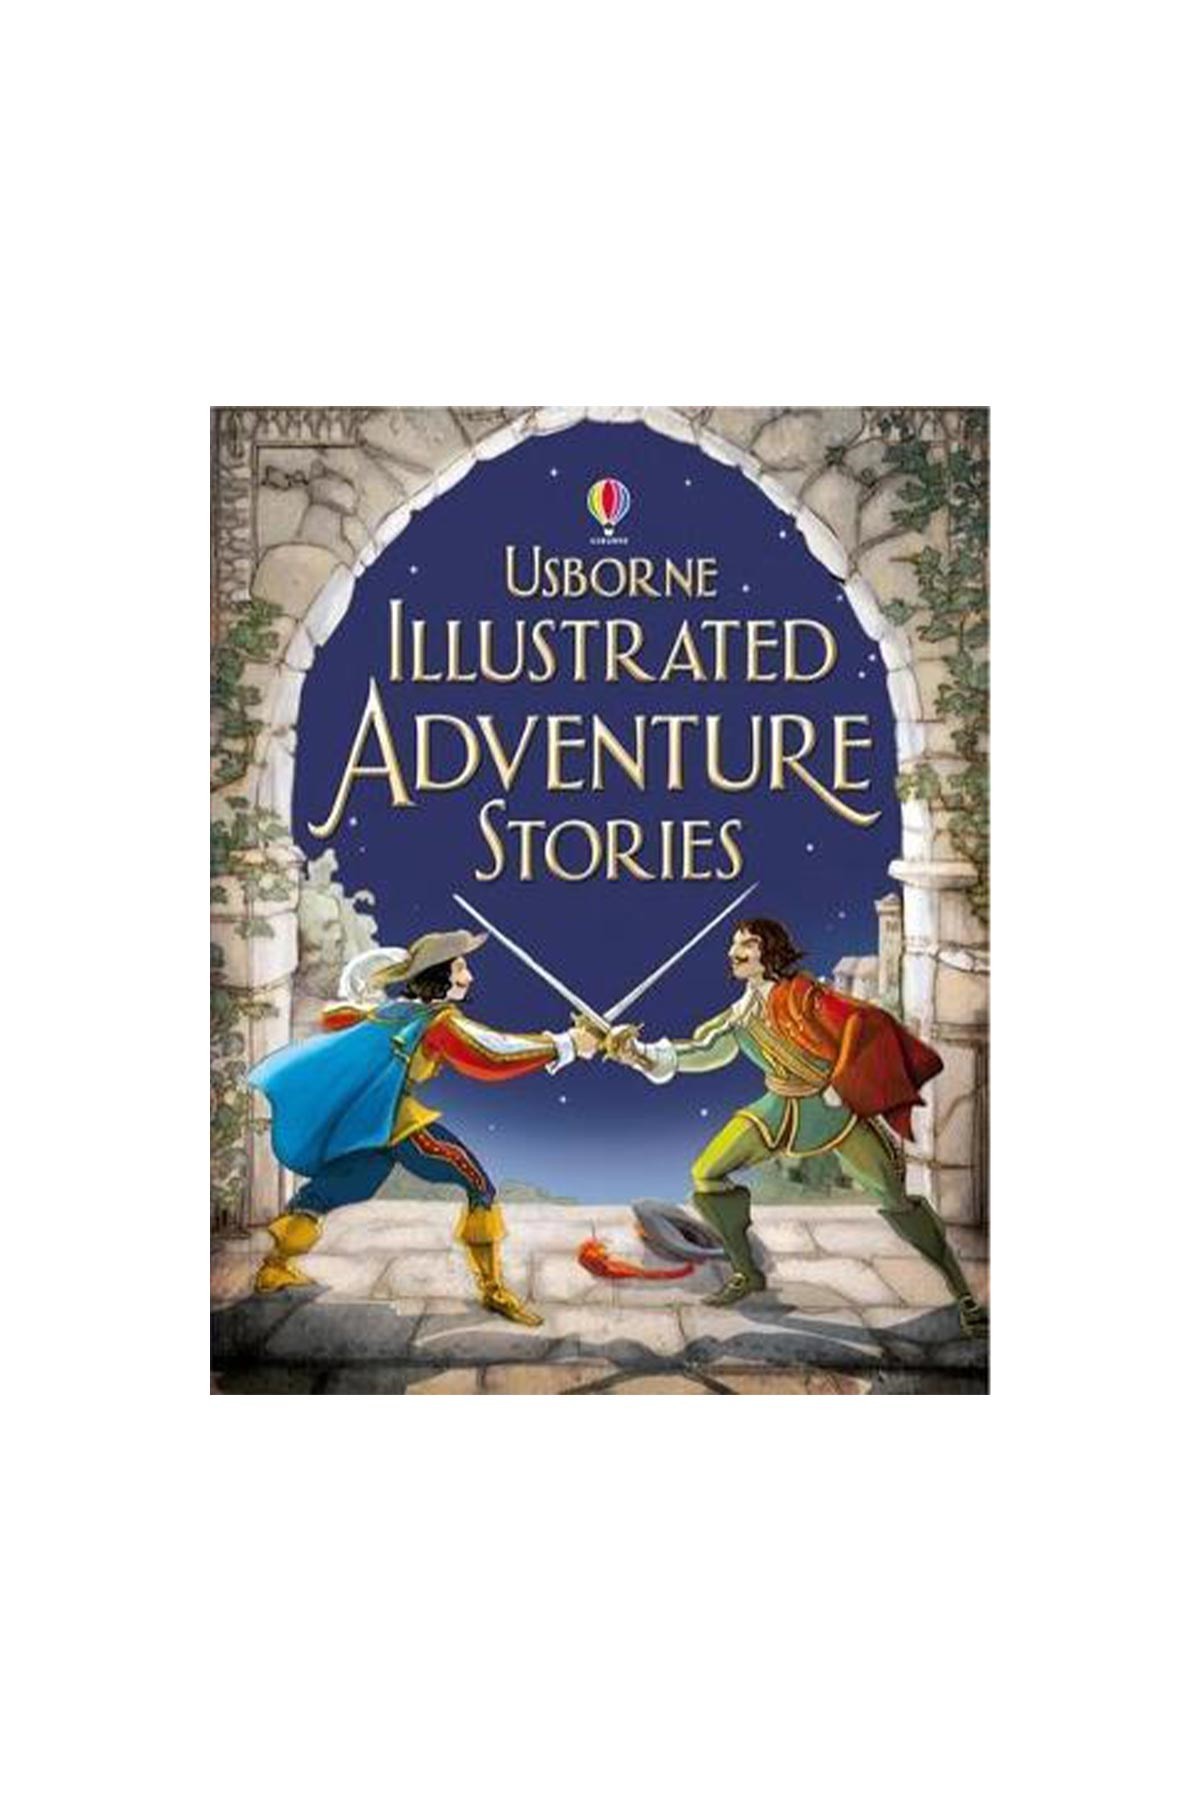 The Usborne Illustrated Adventure Stories